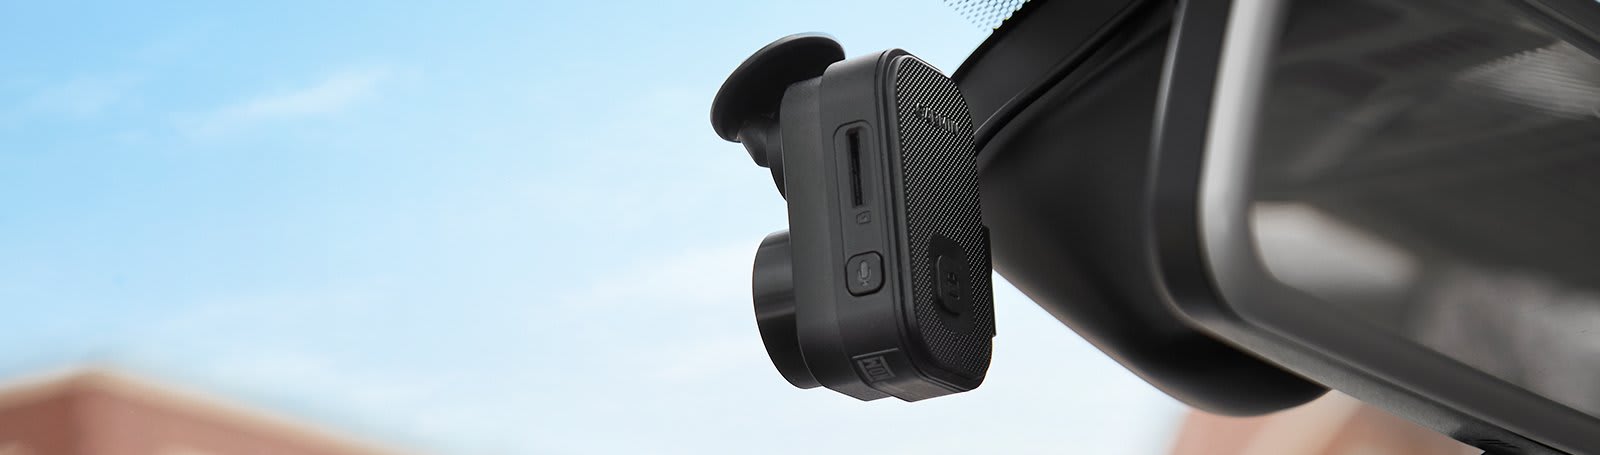 1080p Incident Detection Recording and Signature Series Cloth 140-degree FOV Garmin Dash Cam Mini 2 